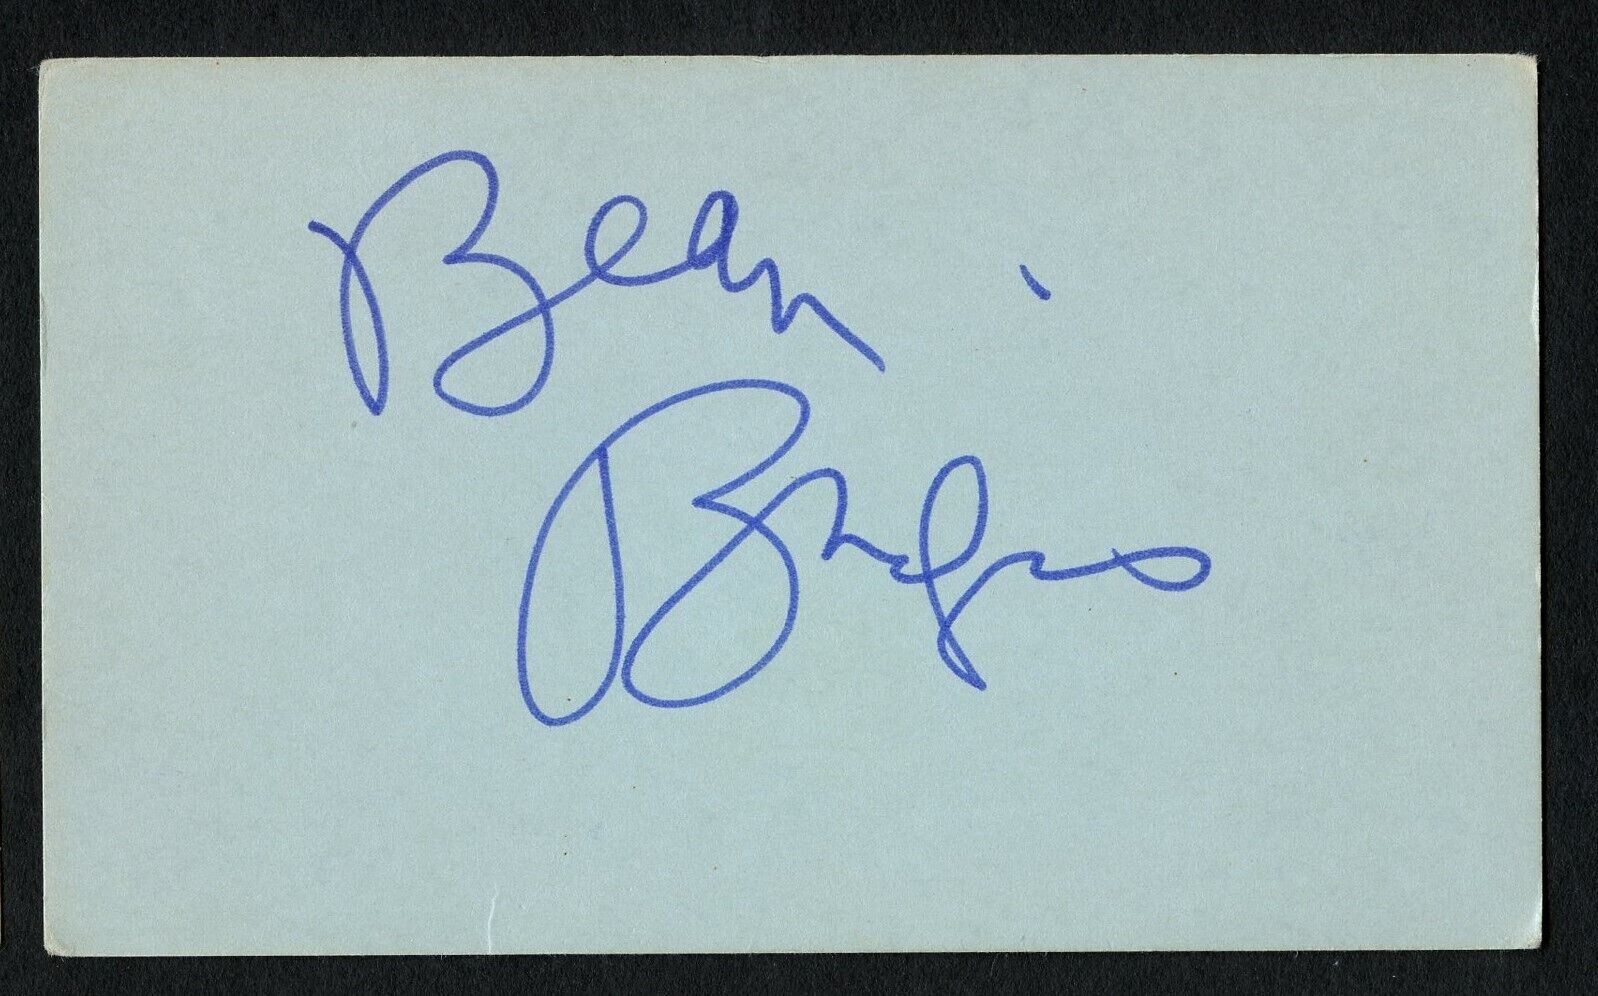 Beau Bridges signed autograph Vintage 3x5 Hollywood: American Actor Max Payne